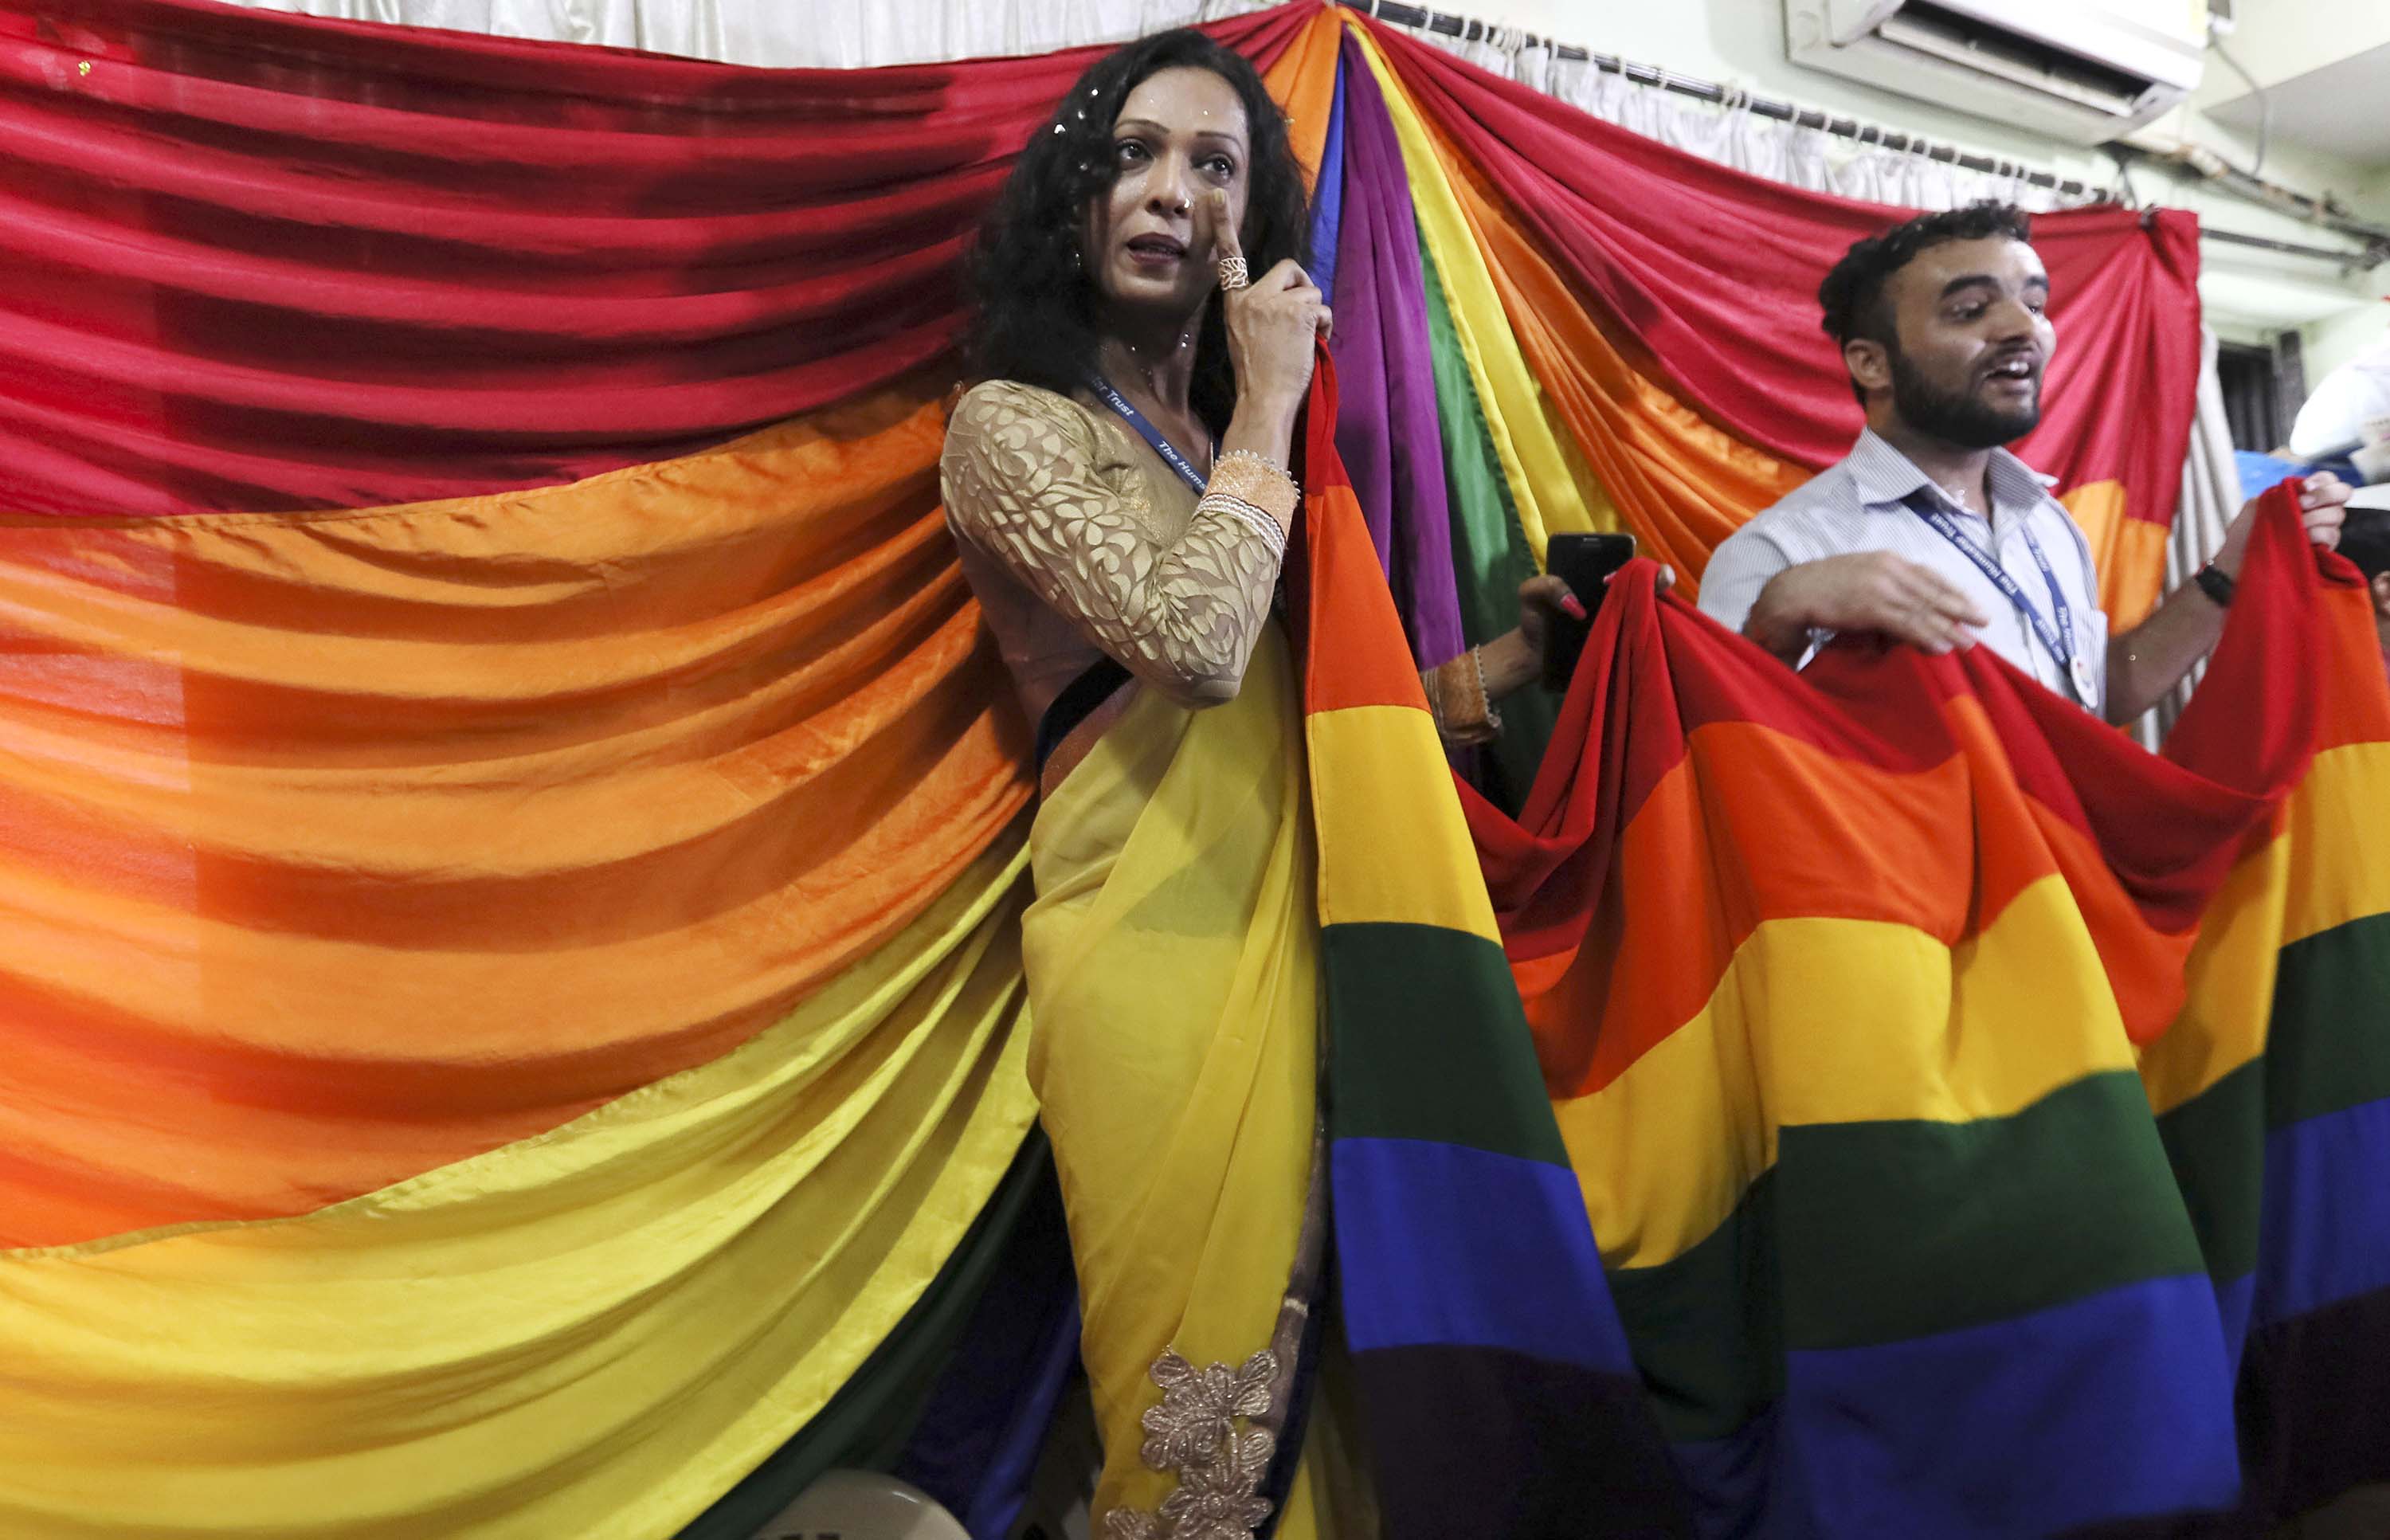 Anjali School Sex - India: gay sex decriminalized by top court in landmark ruling | CNN